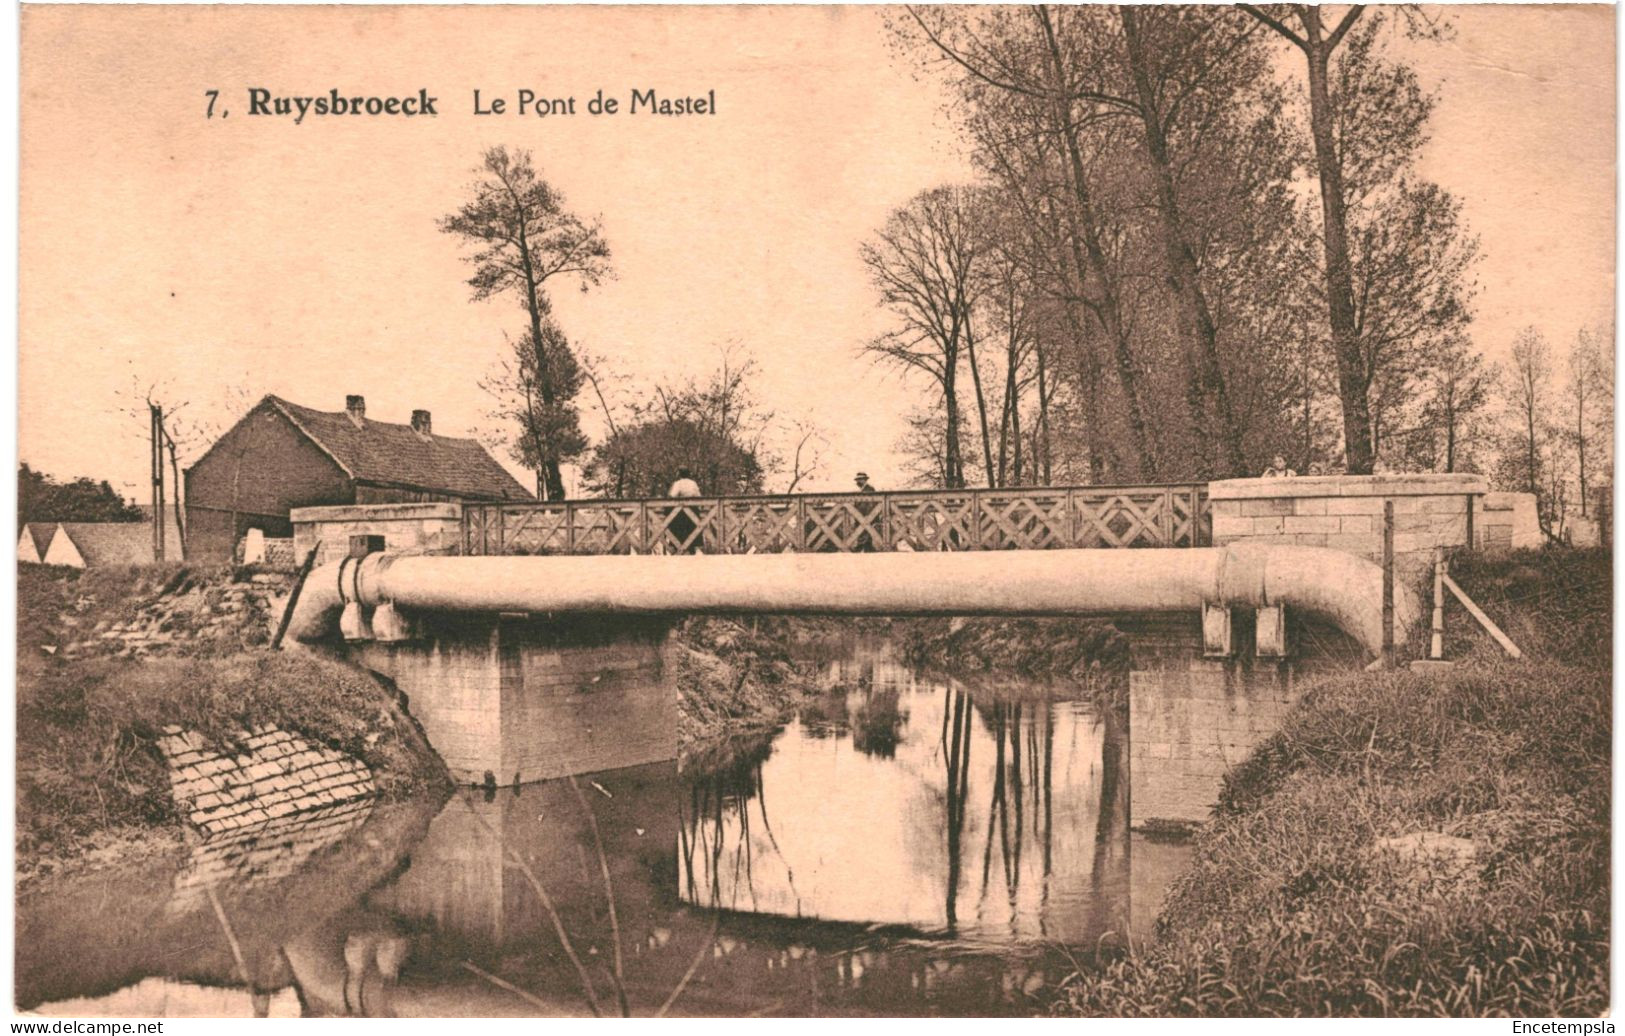 CPA Carte Postale Belgique Ruysbroeck Pont De Mastel   VM76971ok - Sint-Pieters-Leeuw